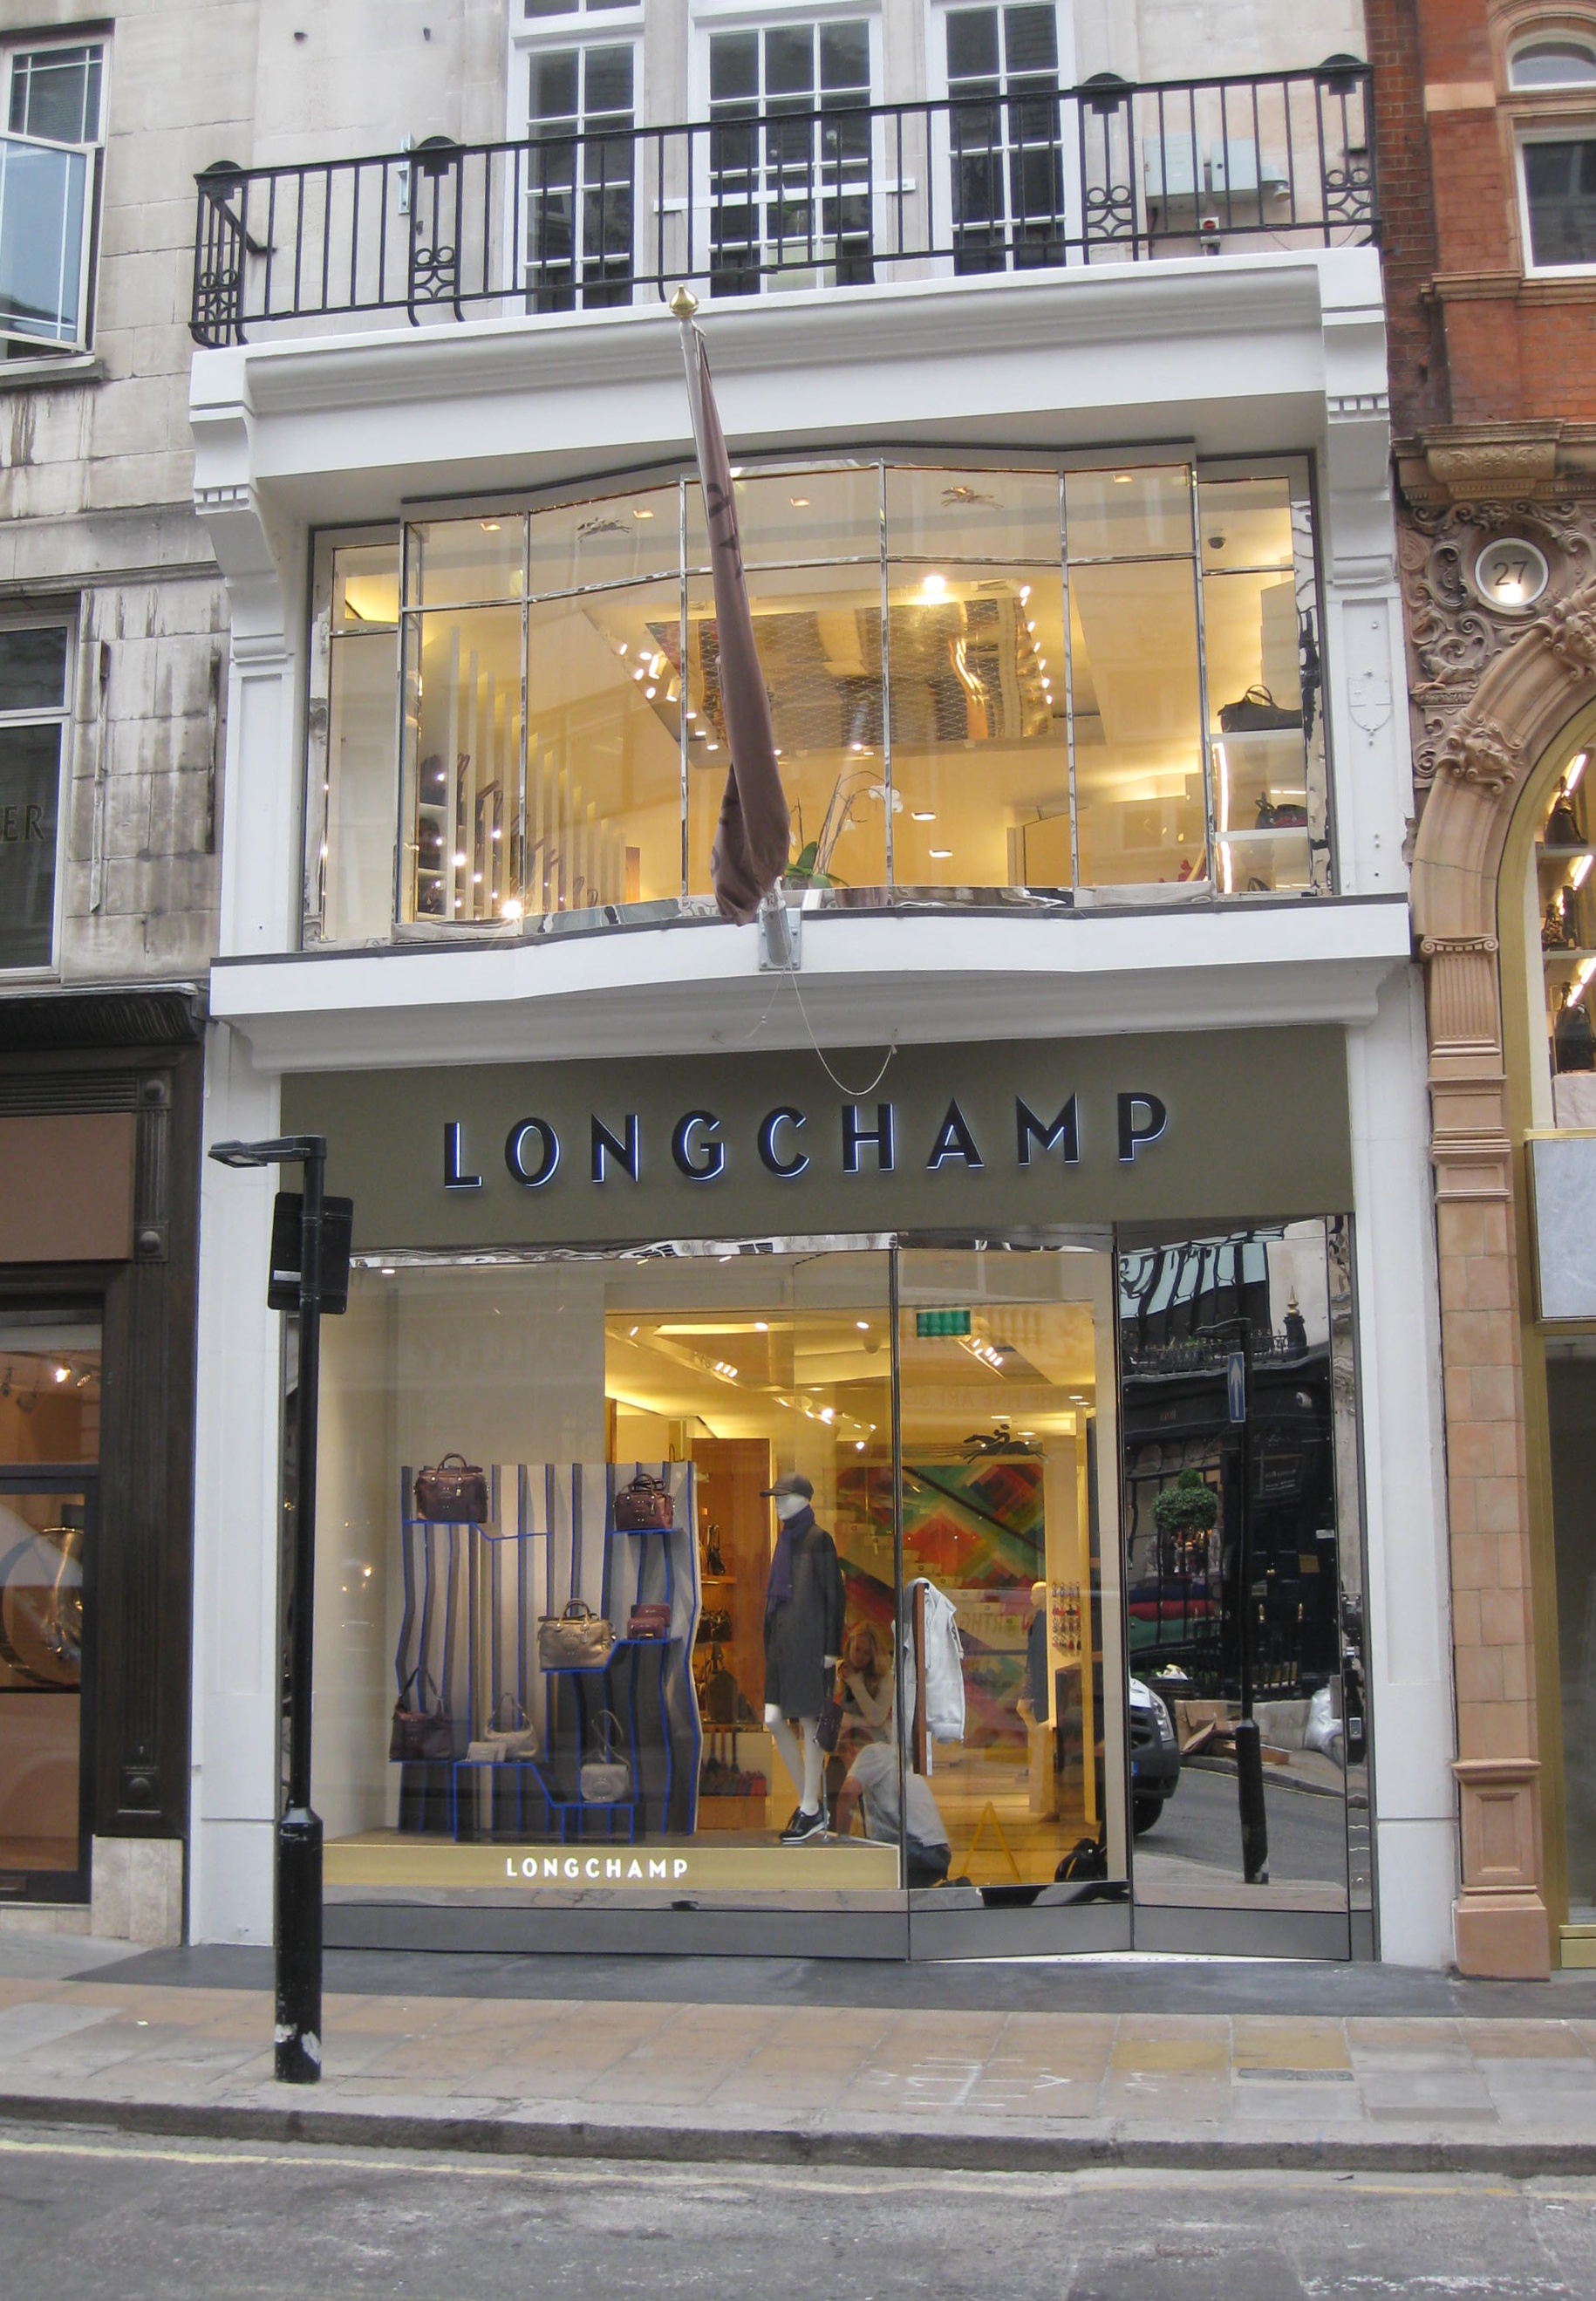 longchamp new bond street